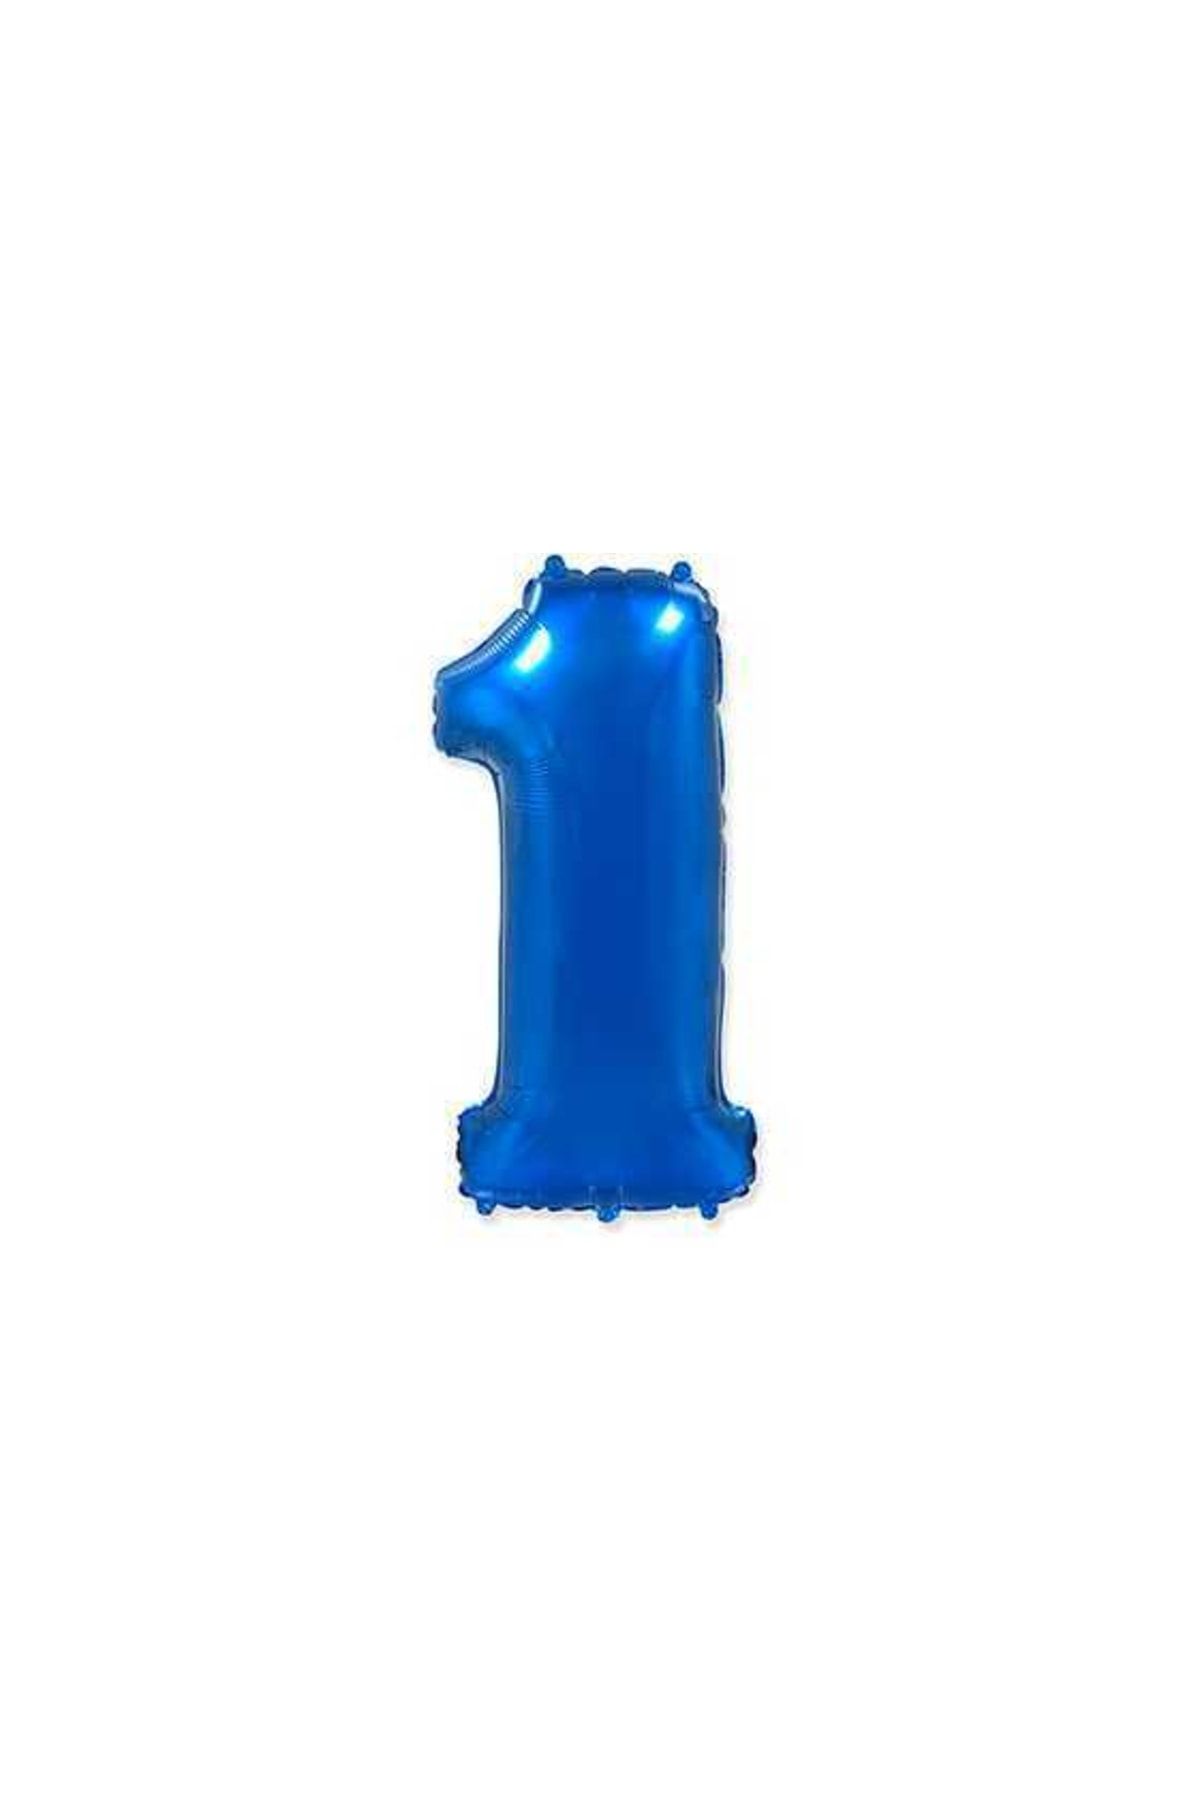 Acar Süs Folyo Balon Ispanya Malı 1 Mavi 32 Inc 1 Adet